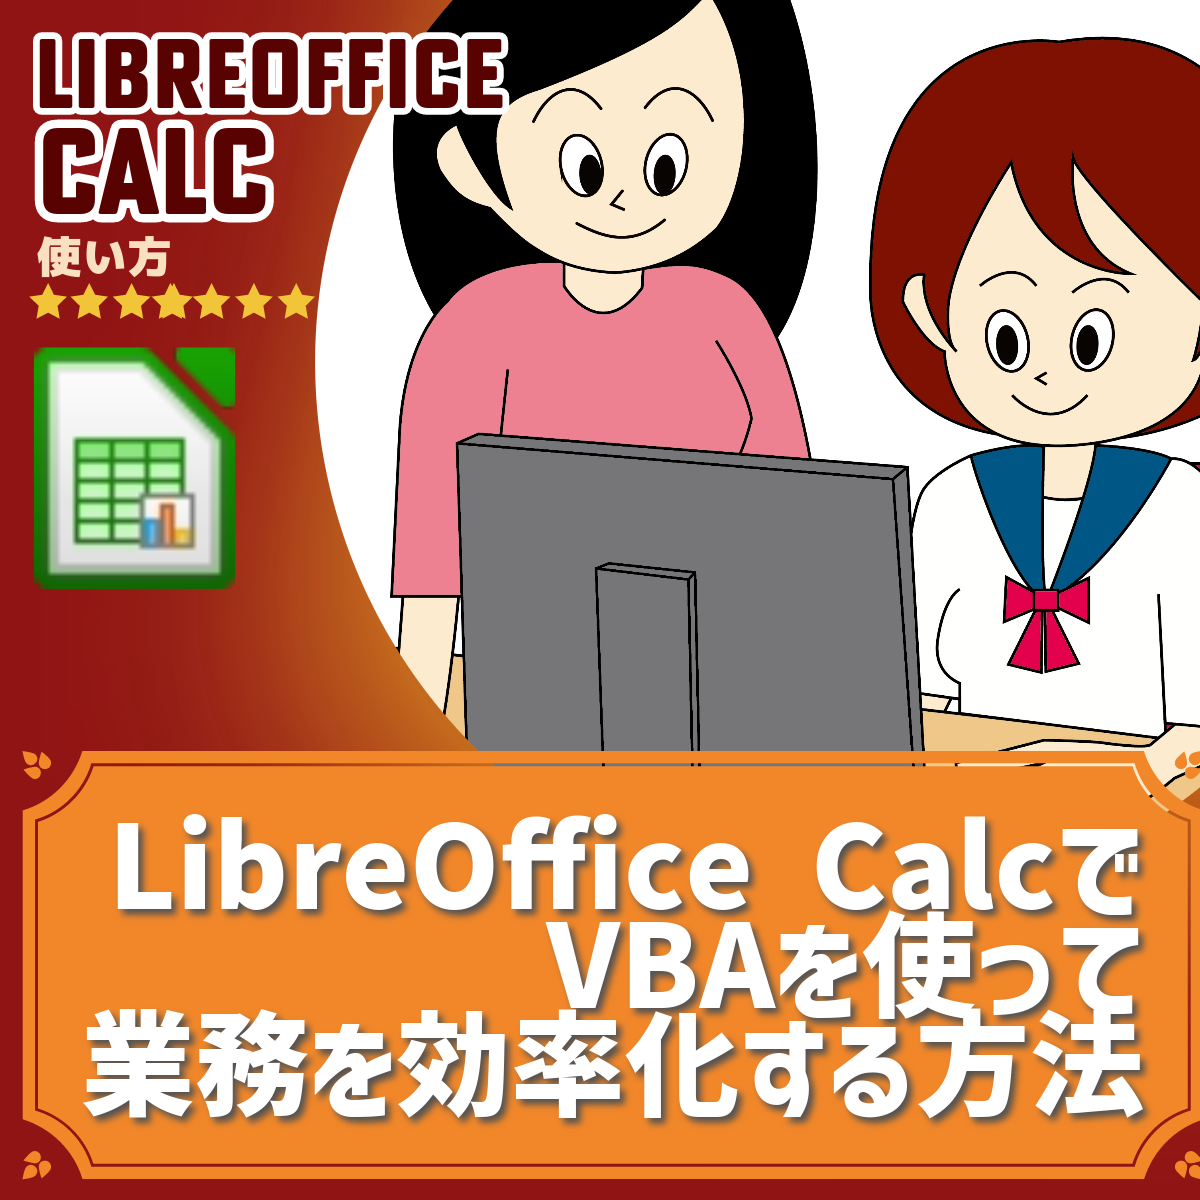 【LibreOffice Calc】LibreOffice CalcでVBAを使って業務を効率化する方法